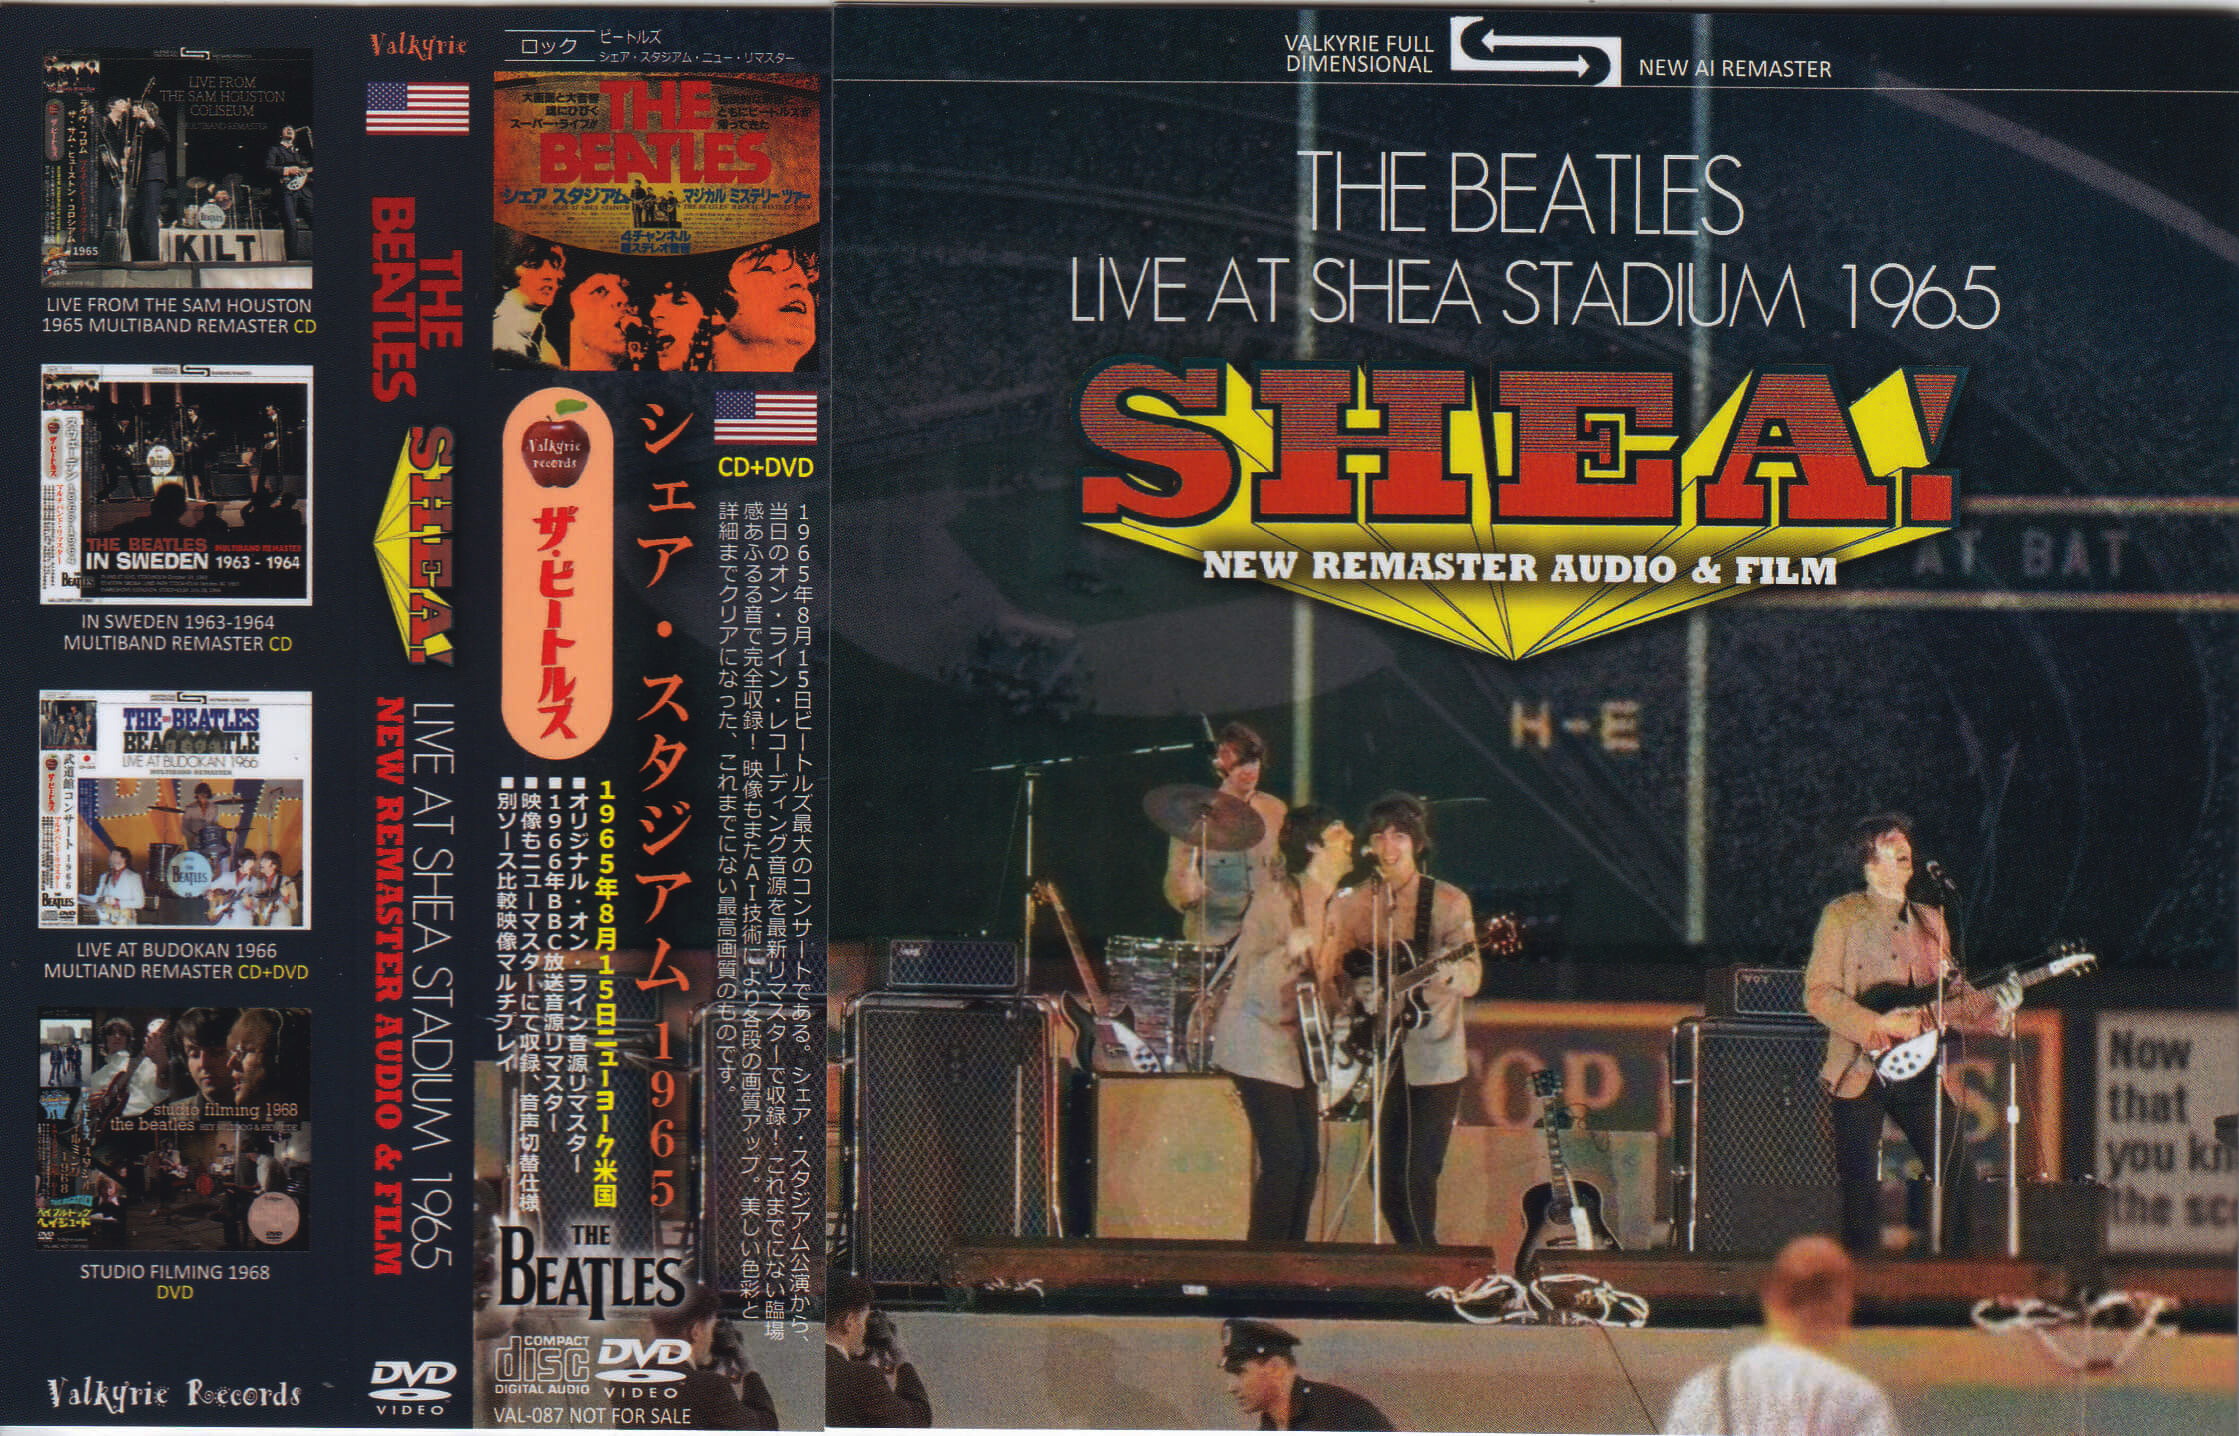 beatles-65live-at-shea-stadium-new-remaster1.jpg